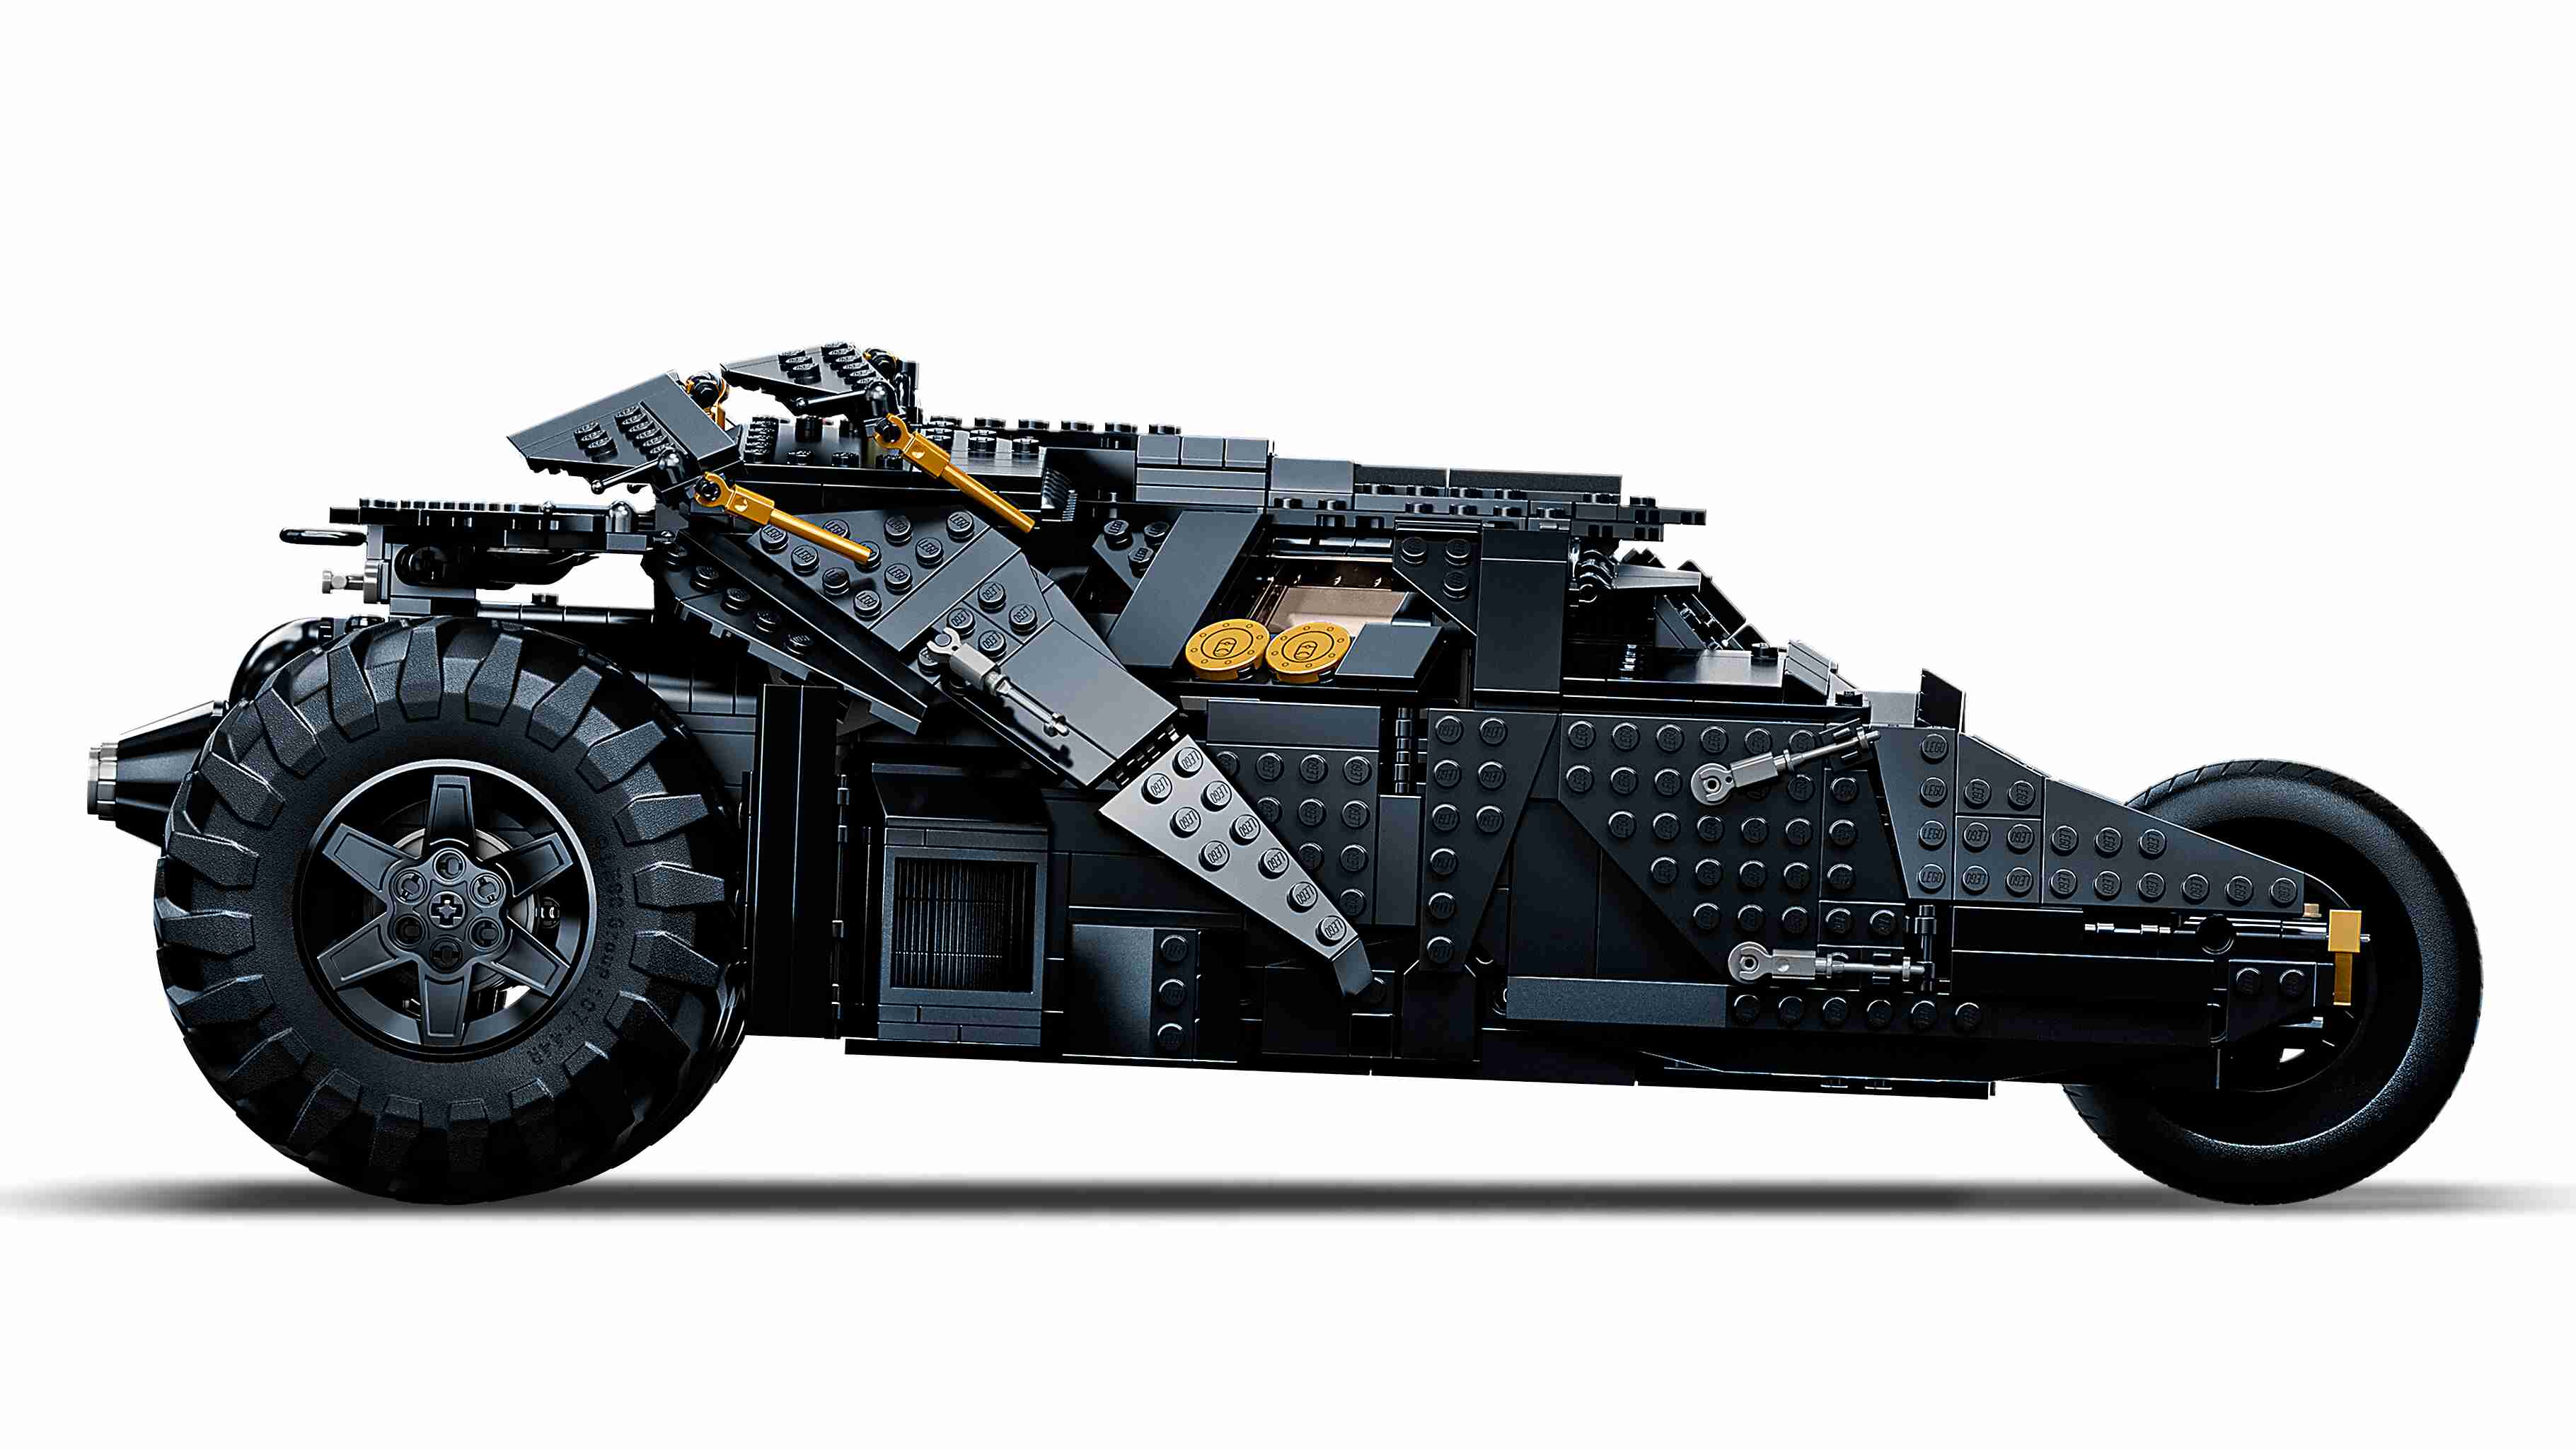 LEGO 76240 DC Batman – Batmobill Tumbler, Bauset für Erwachsene